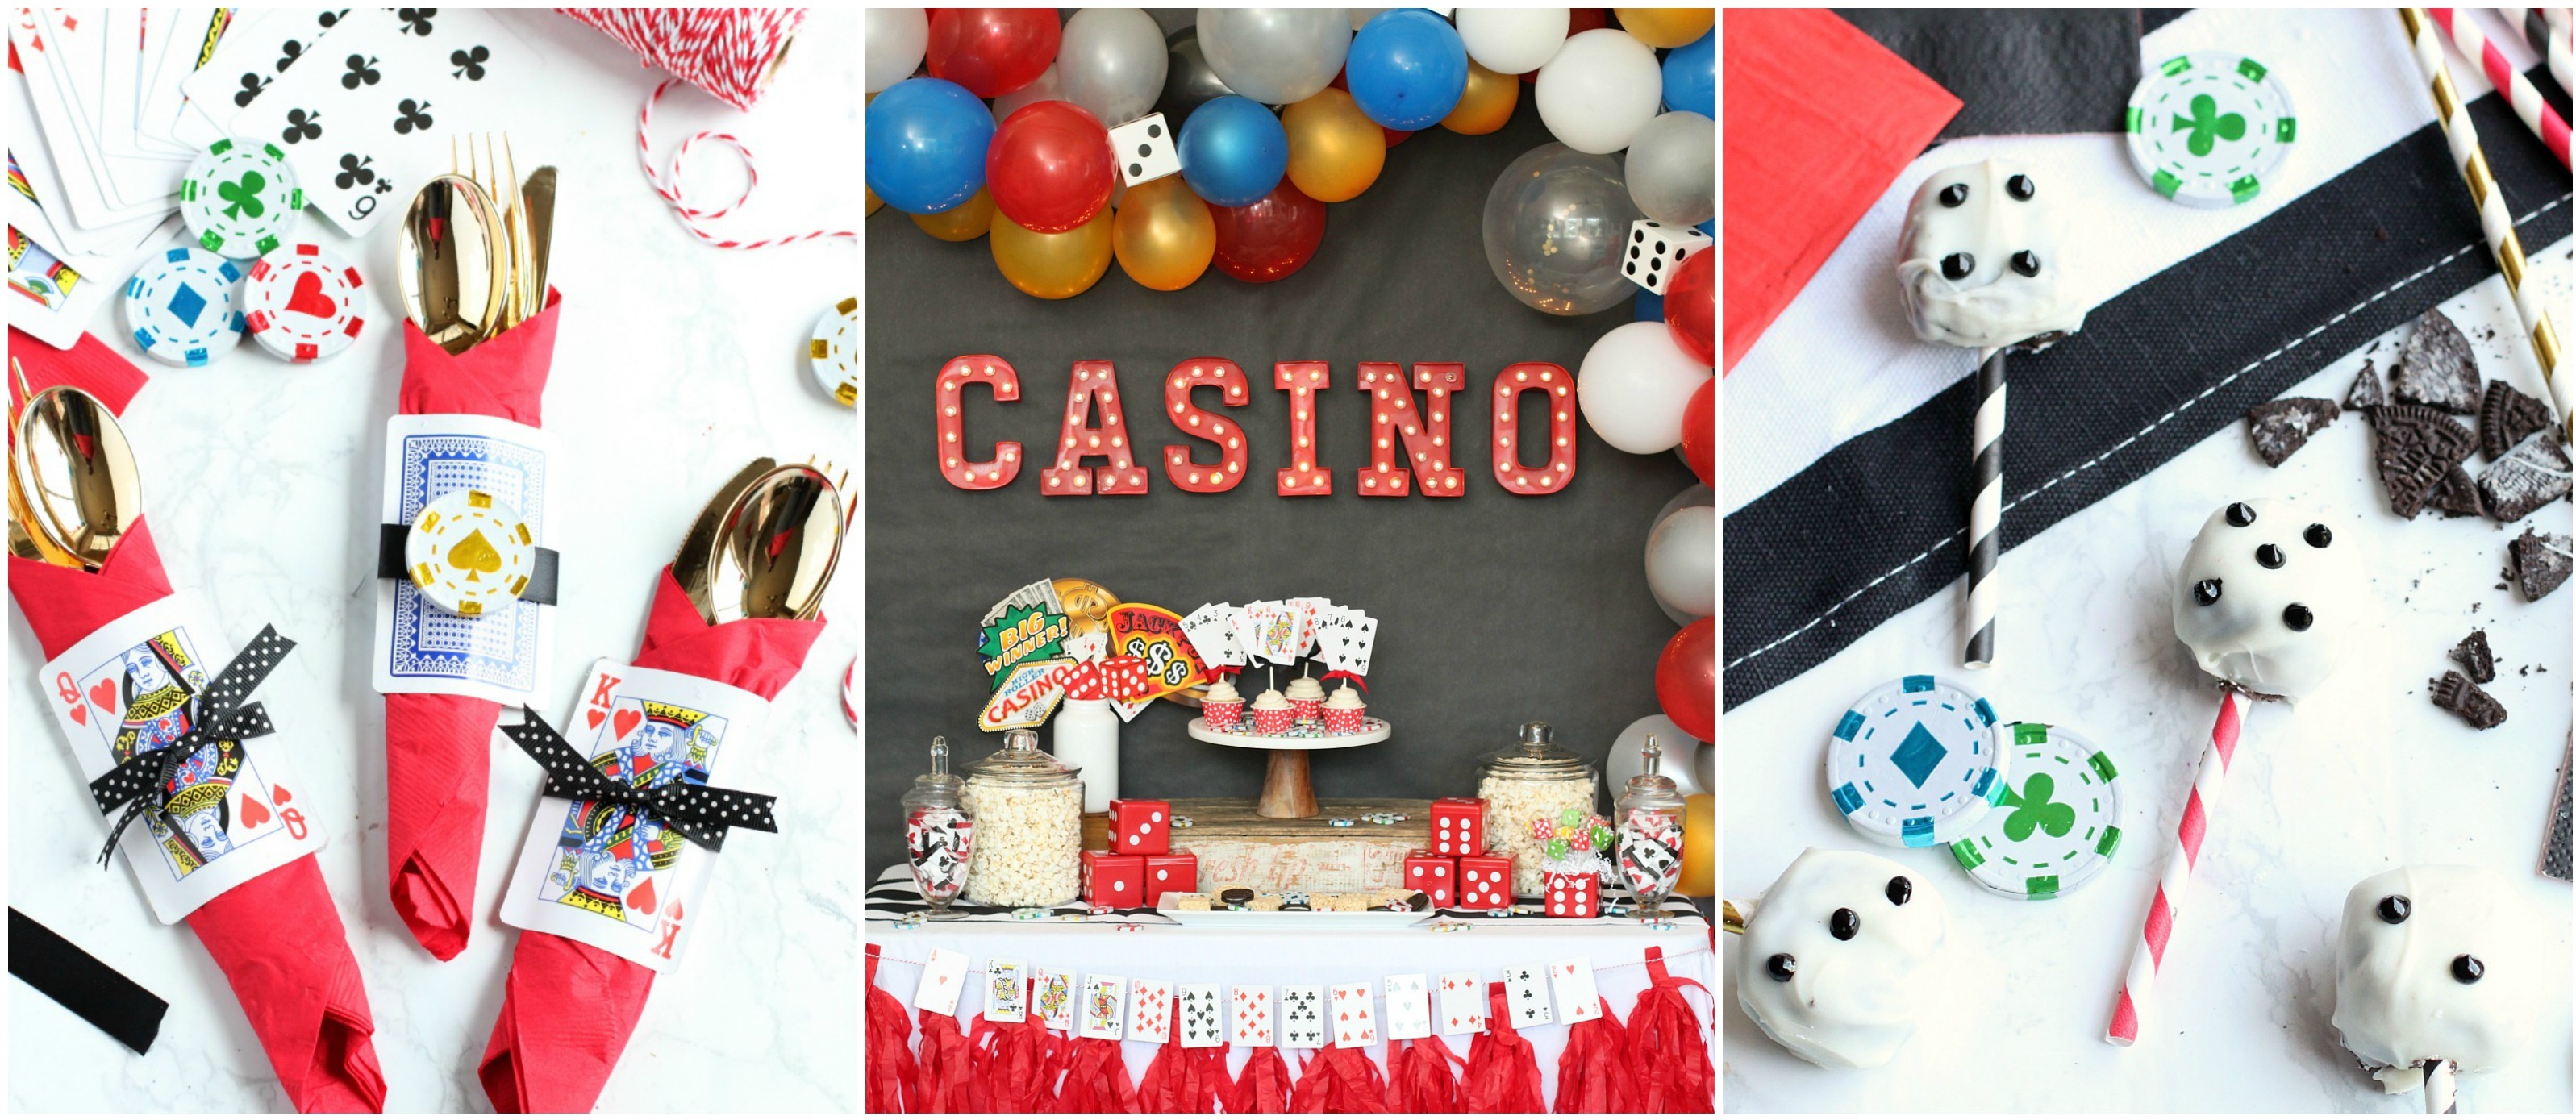 Las Vegas Casino Theme Birthday Party Decor Red and Black Balloon Garland  Dice Poker Balloons Tablecloth Games Night Decor Adult - AliExpress